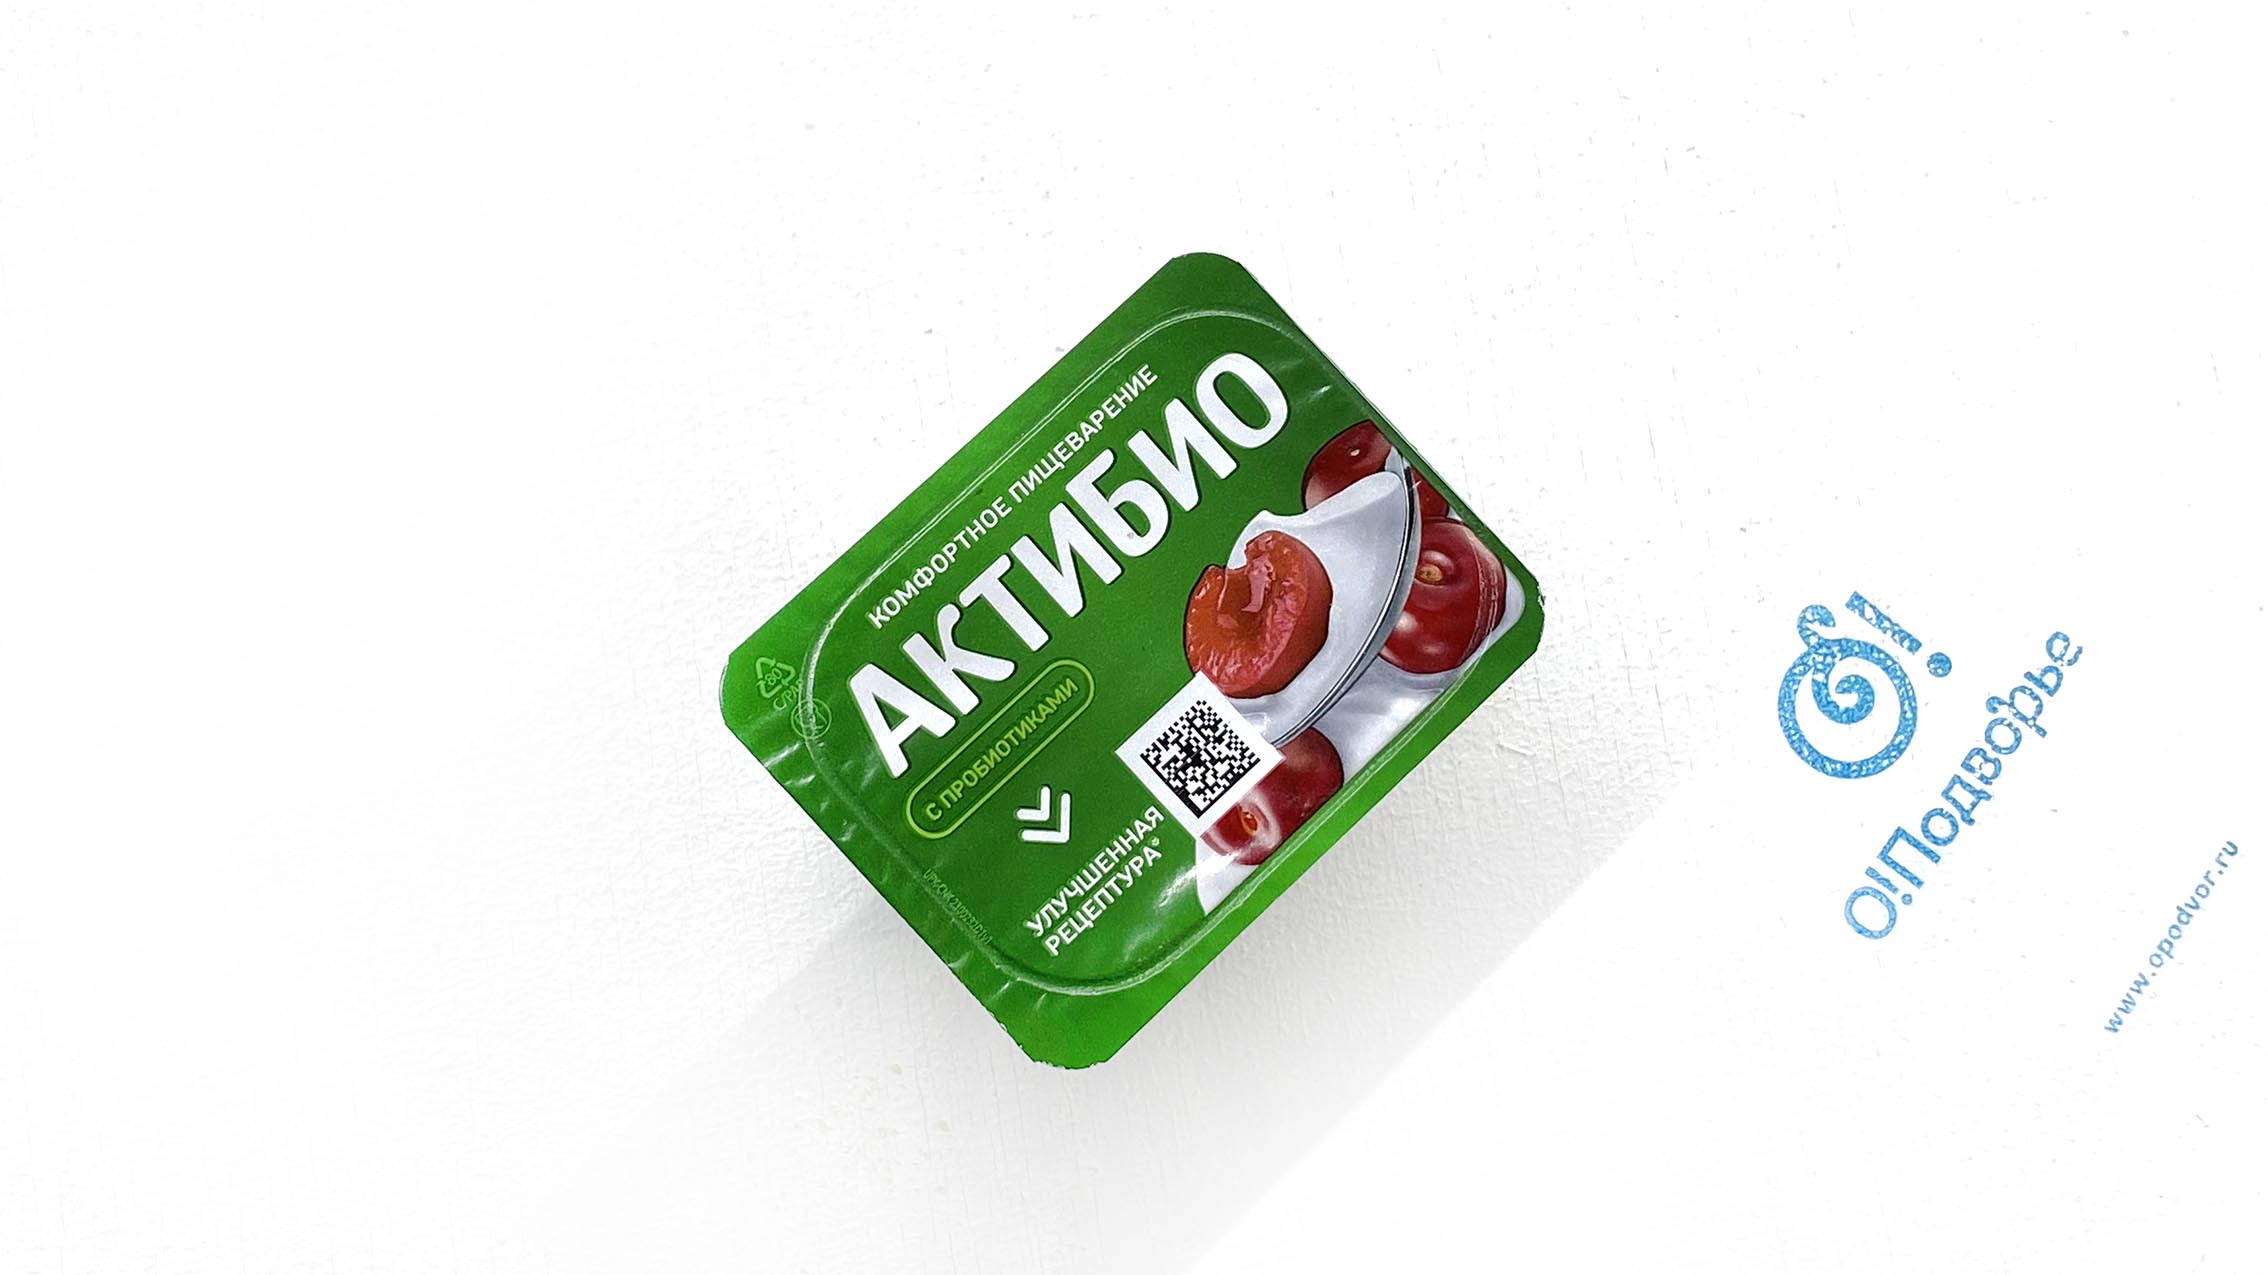 "Актибио", йогурт, обогащенный бифидобактериями B. LACTIS, с вишней, 2,9%, АО "Эйч энд Эн", 130 грамм, (Зл)